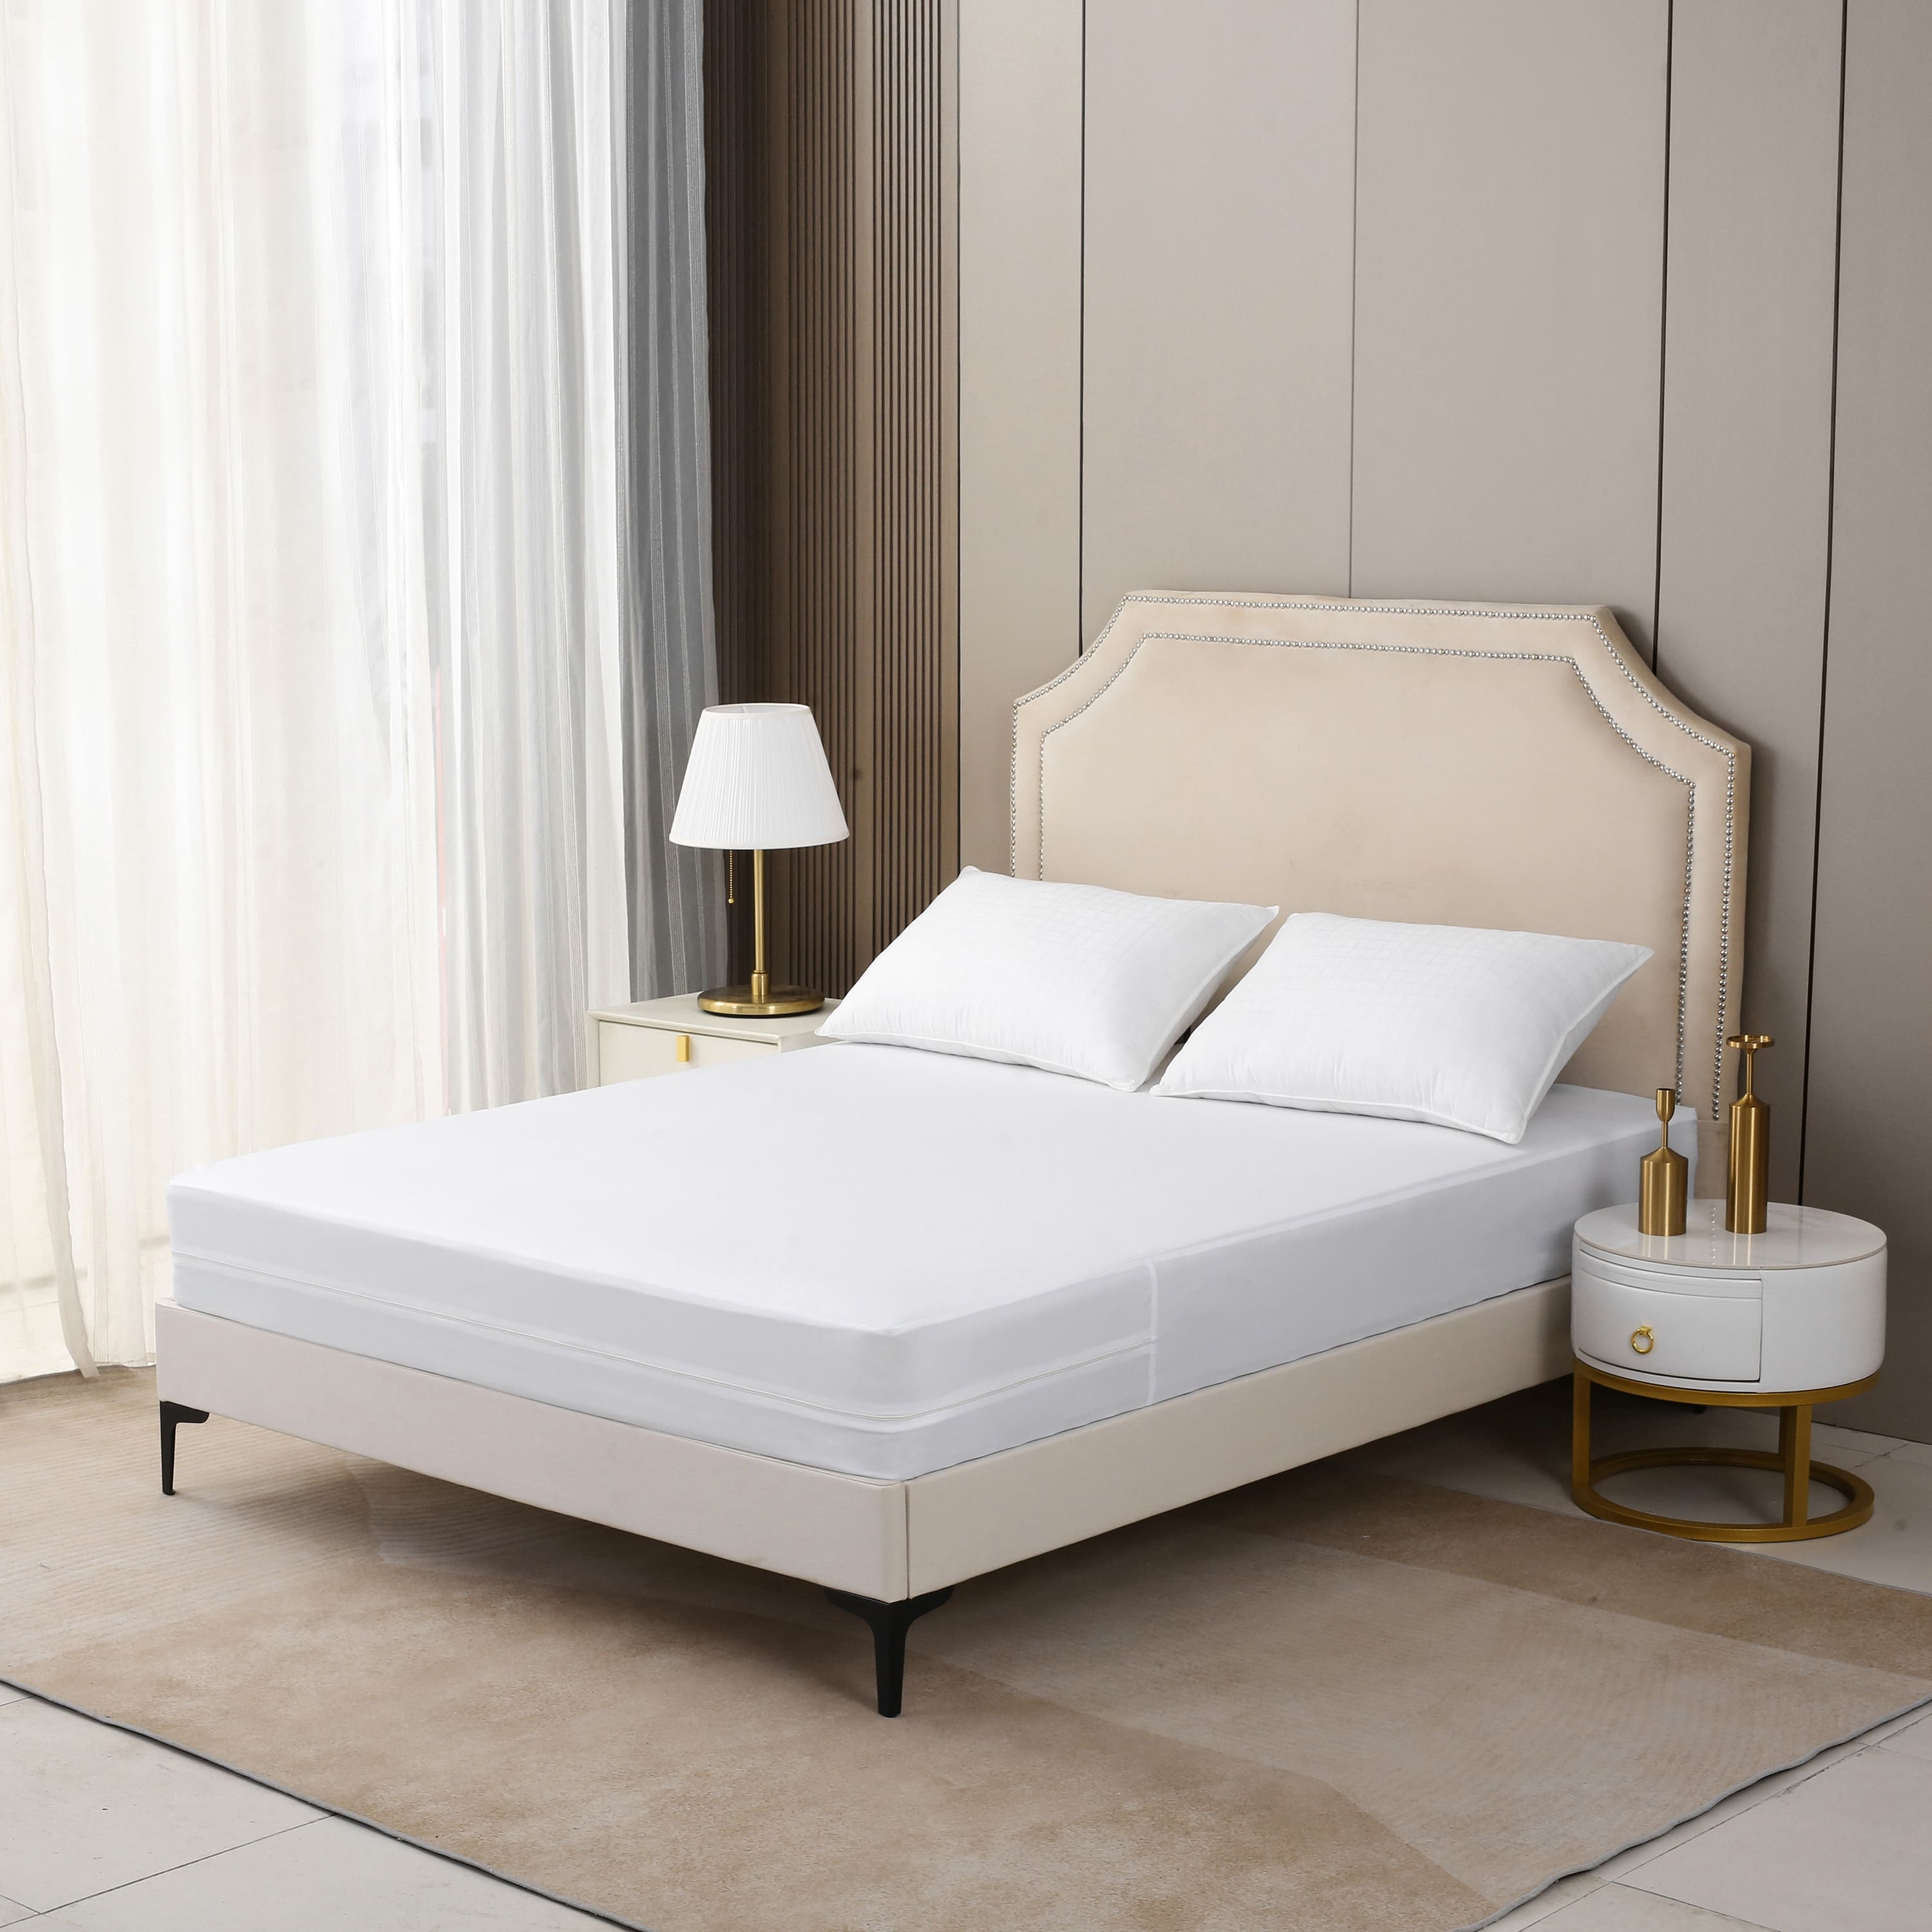 Marina Decoration Soft 100% Waterproof Bed Bug Proof Encasement ...